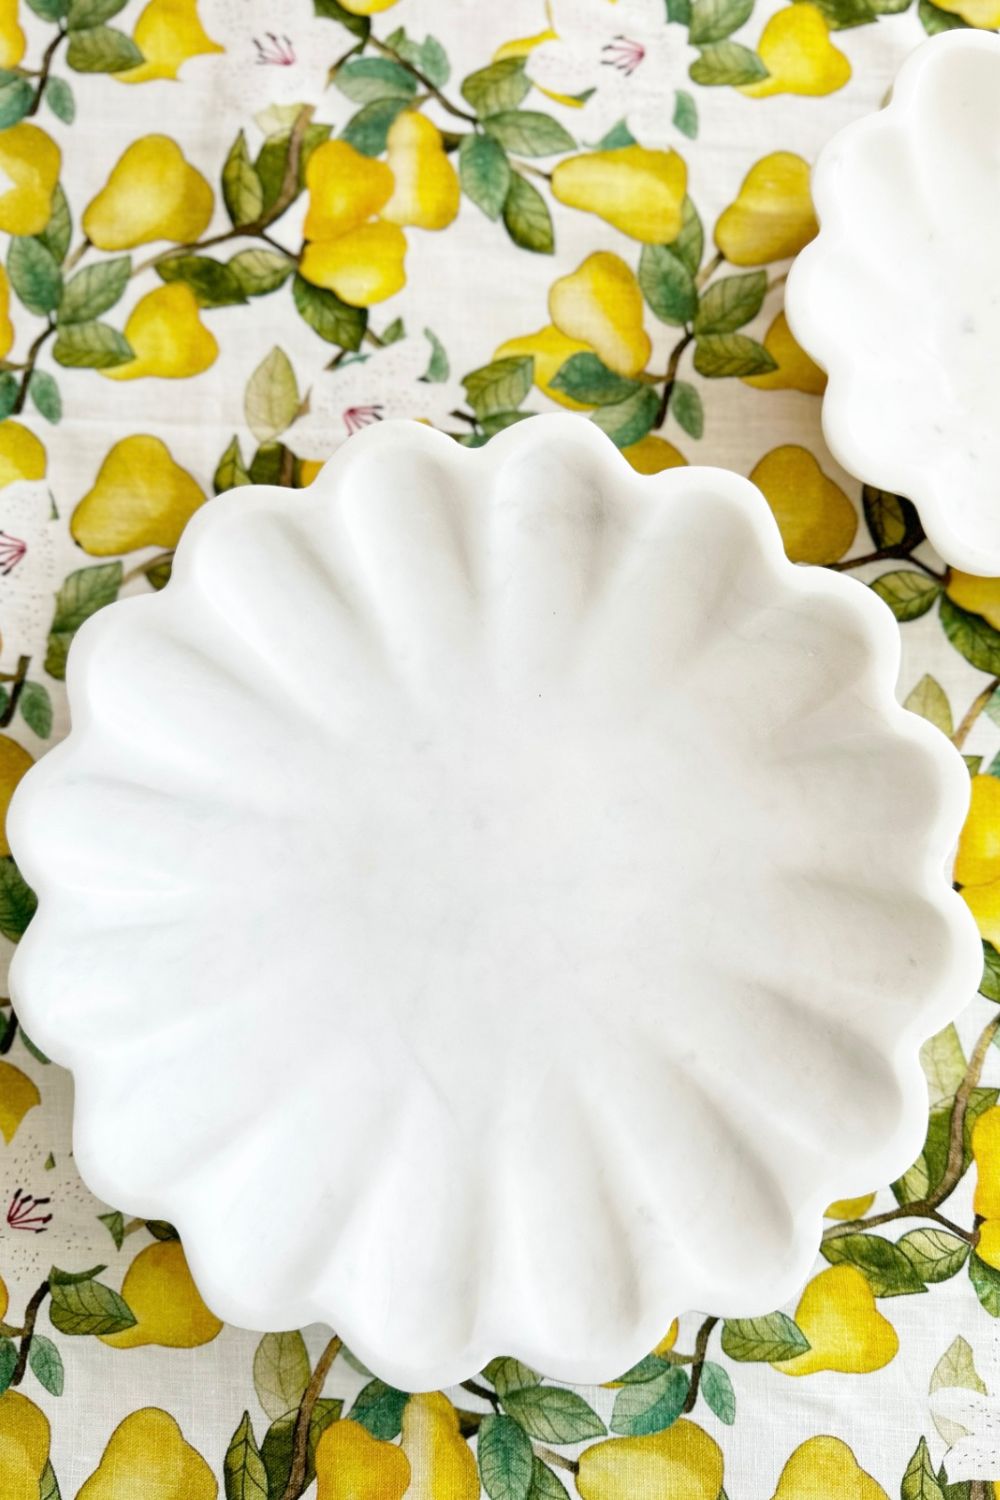 Flor Marble Bowl - Large